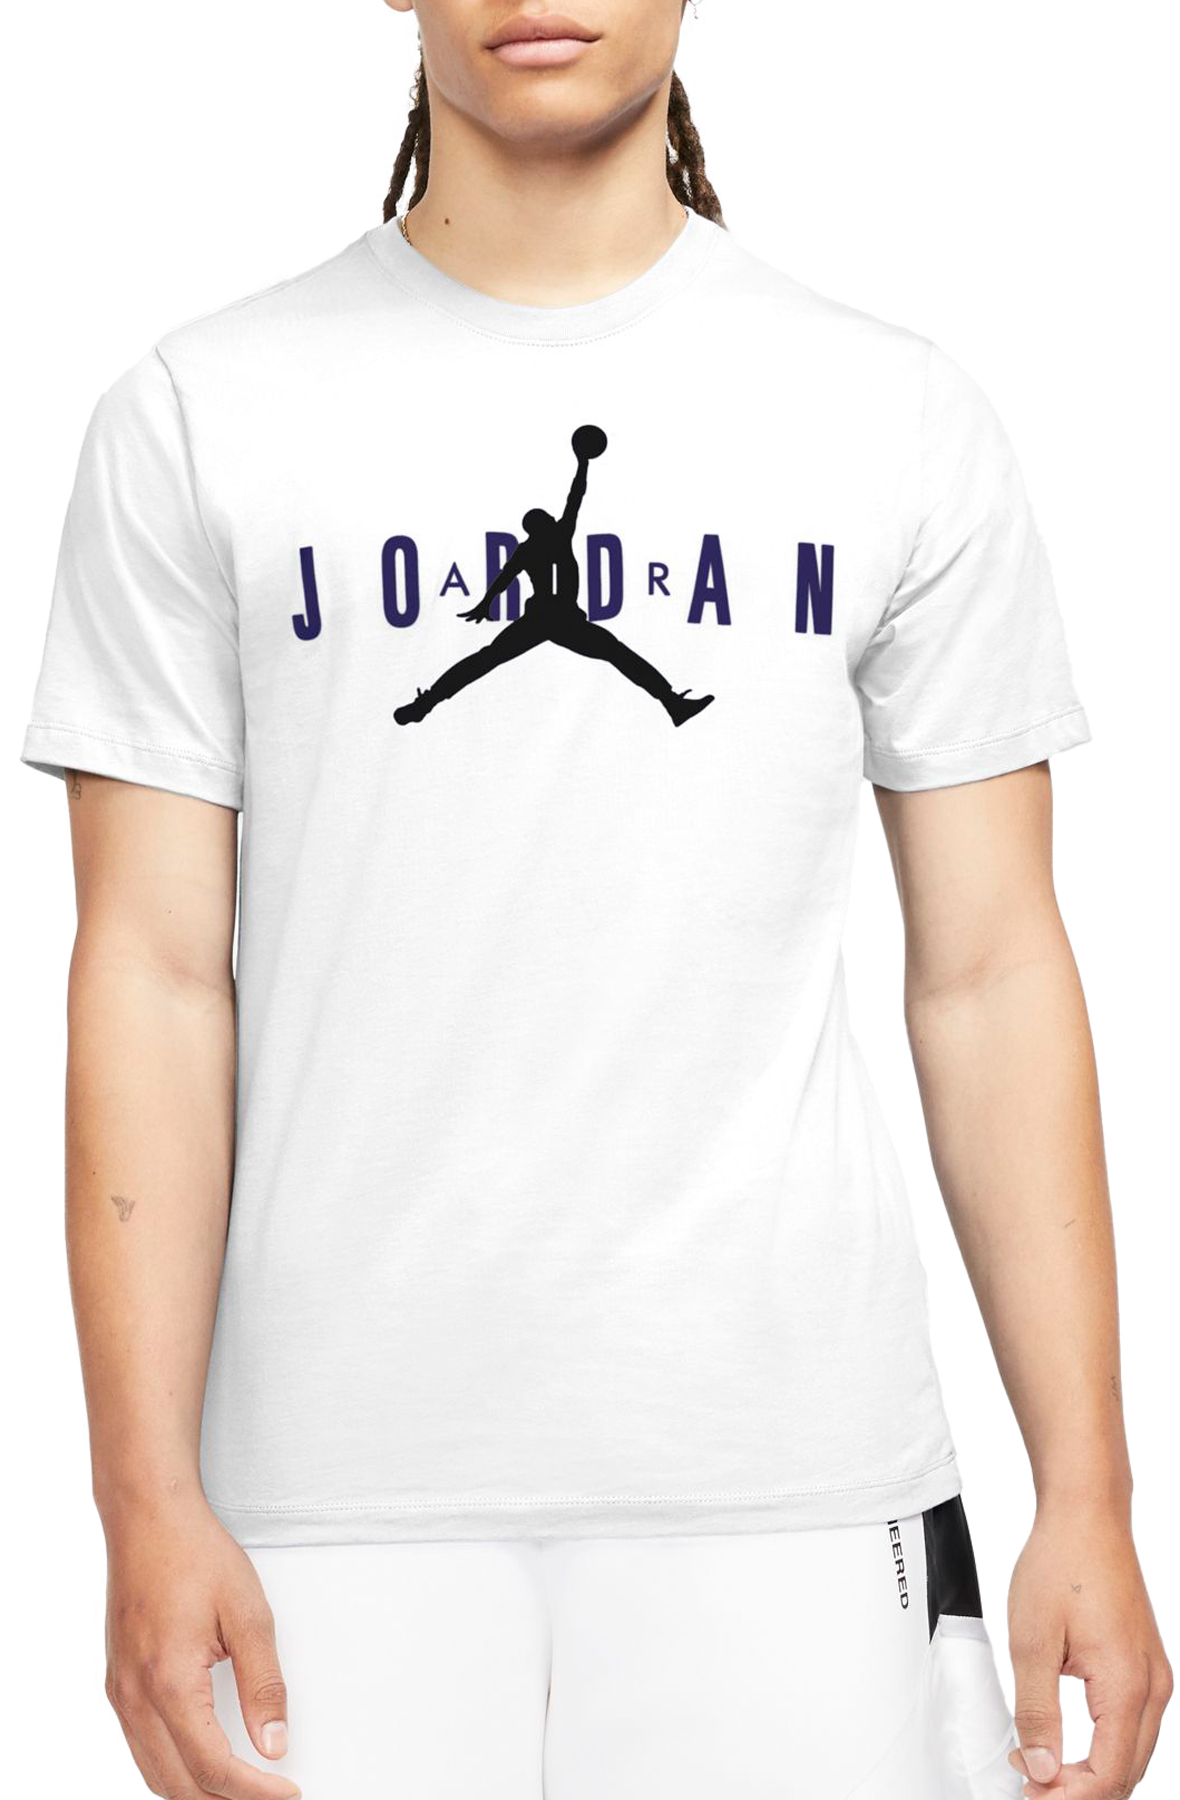 Brendan Jordan Basics V.1: He/She/Queen White Cropped Shirt 2XL